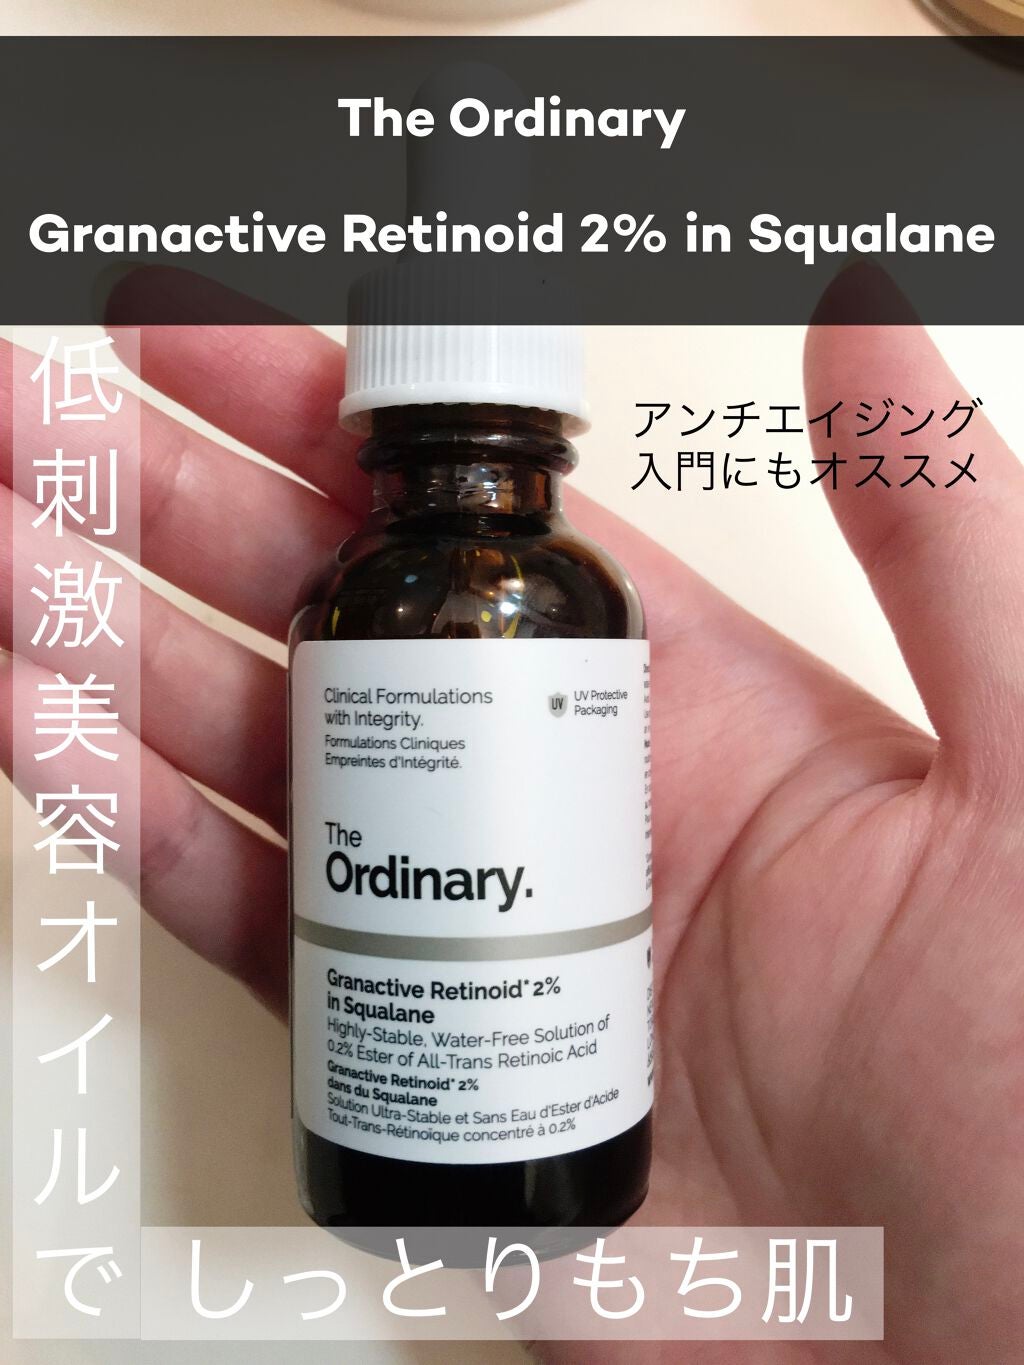 Retinoid in Squalane｜The Ordinaryの使い方を徹底解説 - エイジングケアにおすすめの美容液！◇The Ordinary Granac by may8(混合肌) |